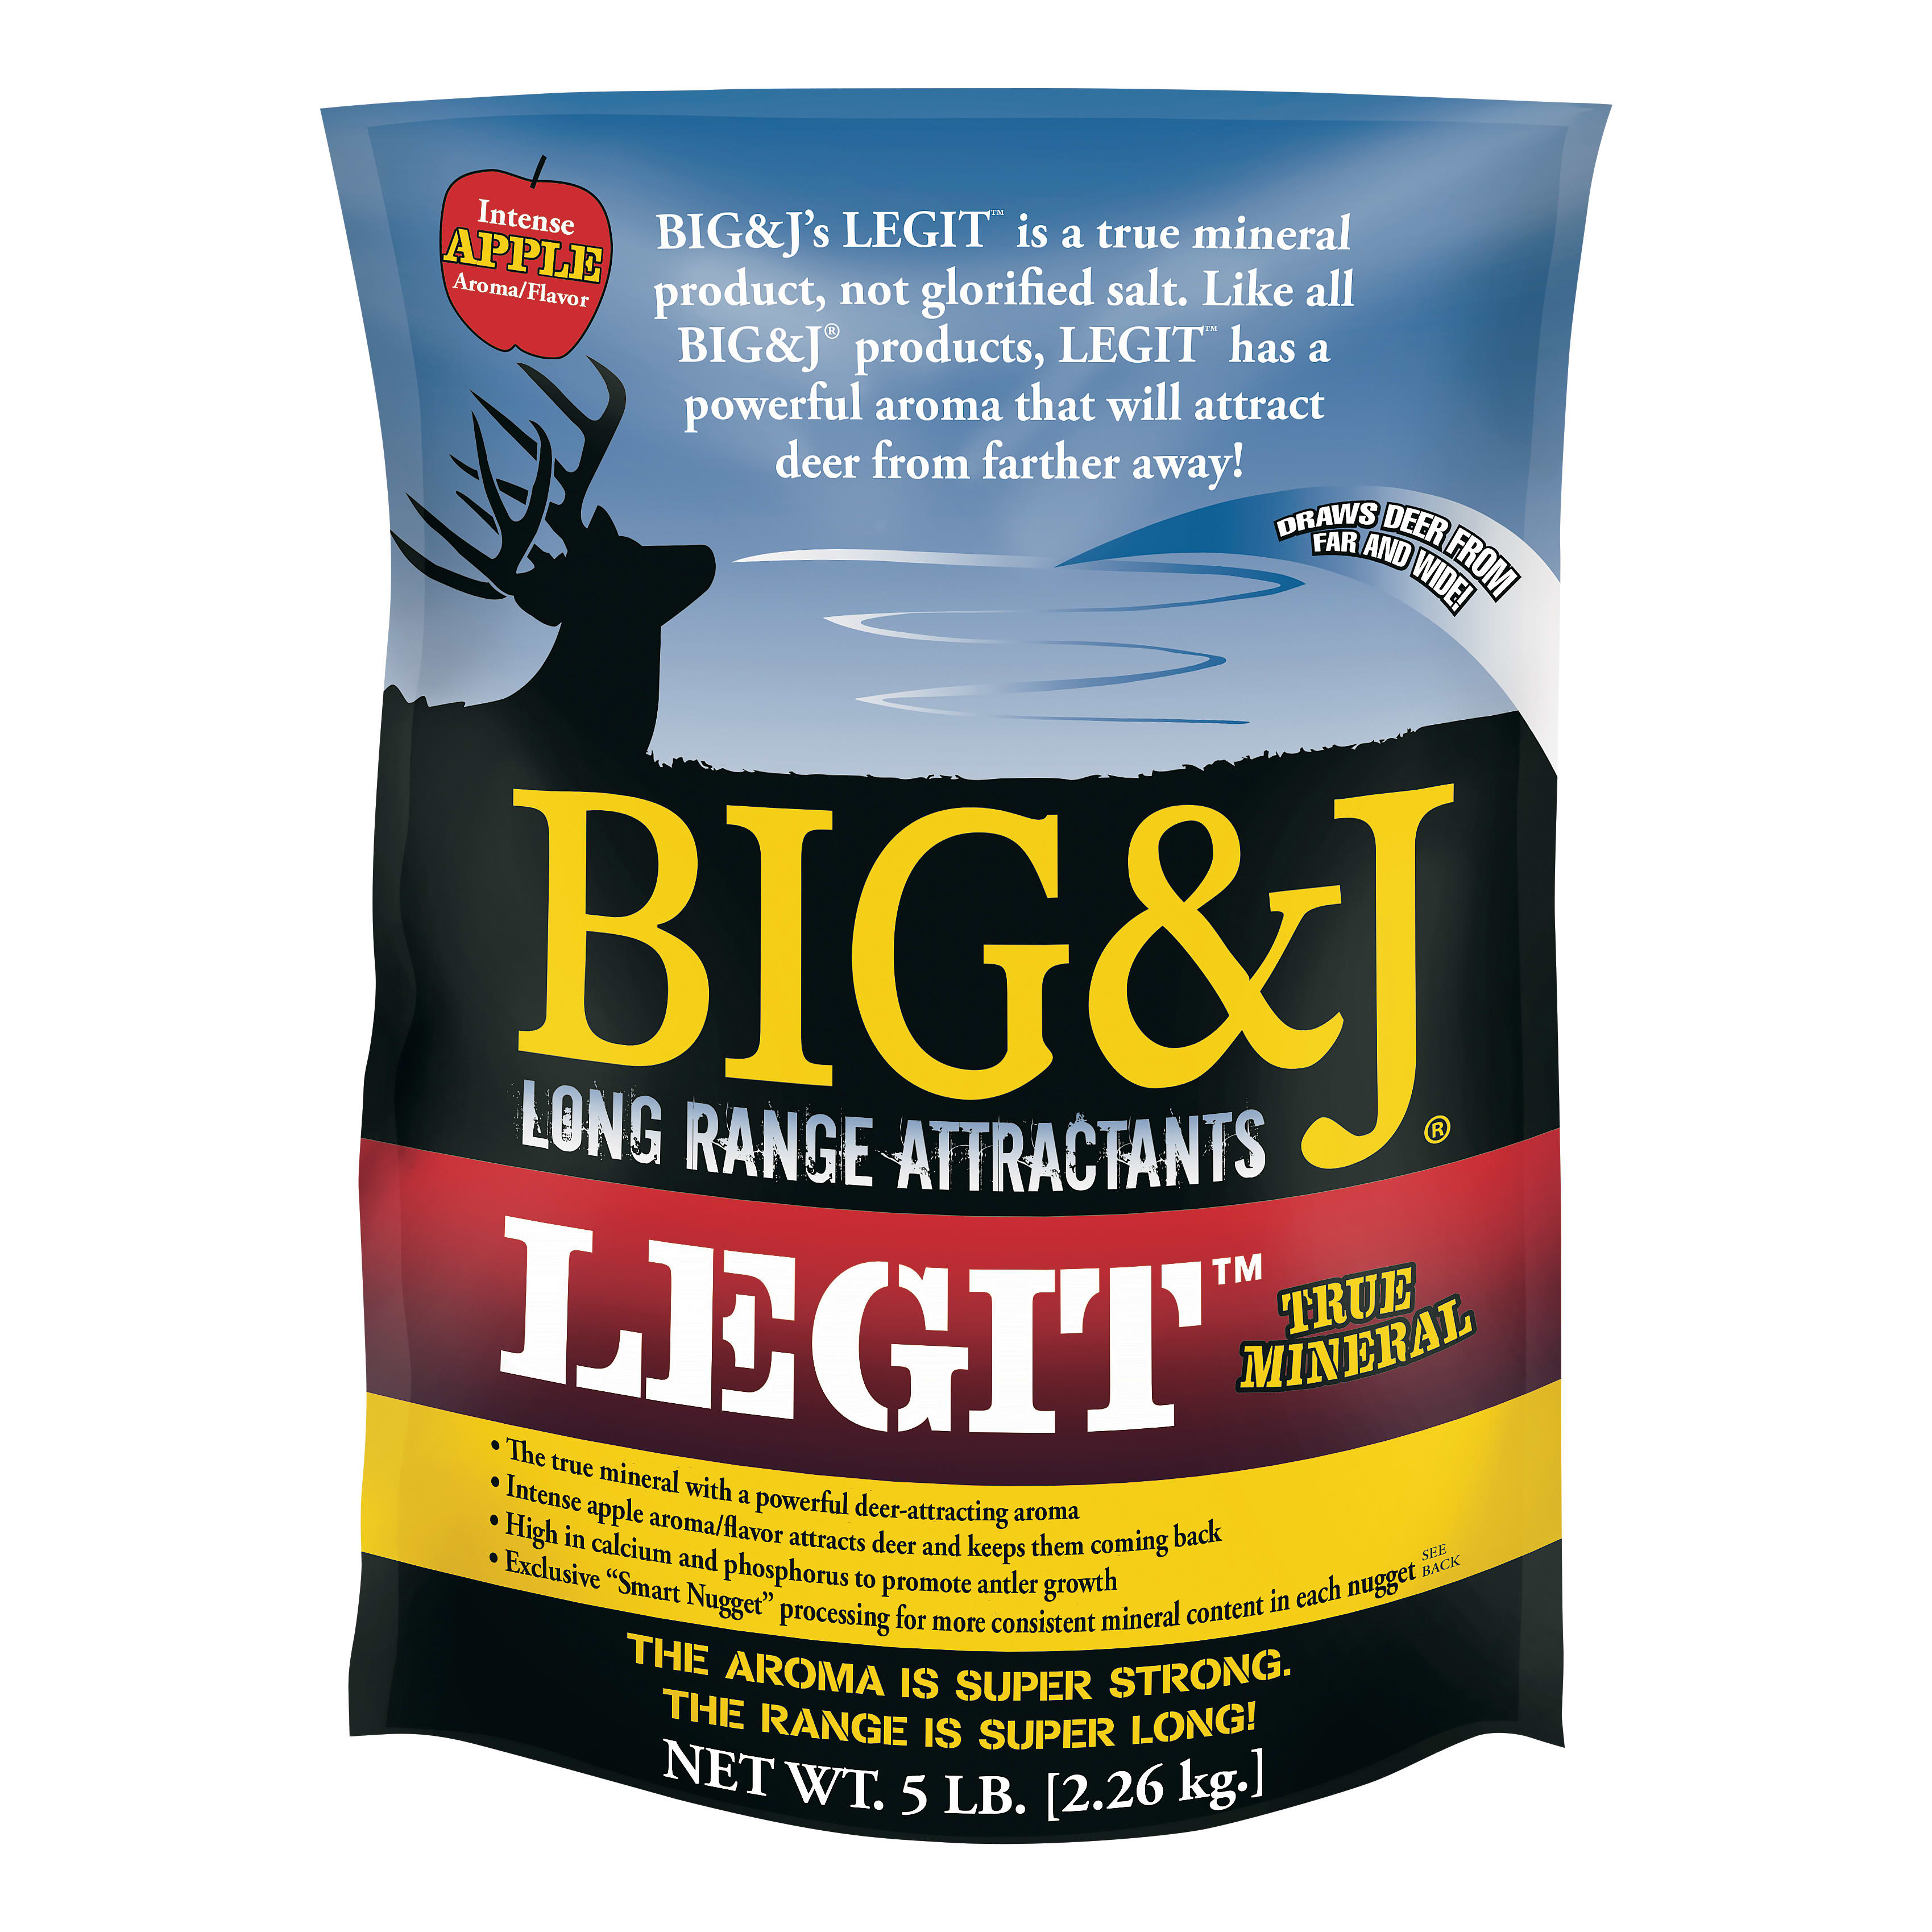 Big & J Legit Mineral